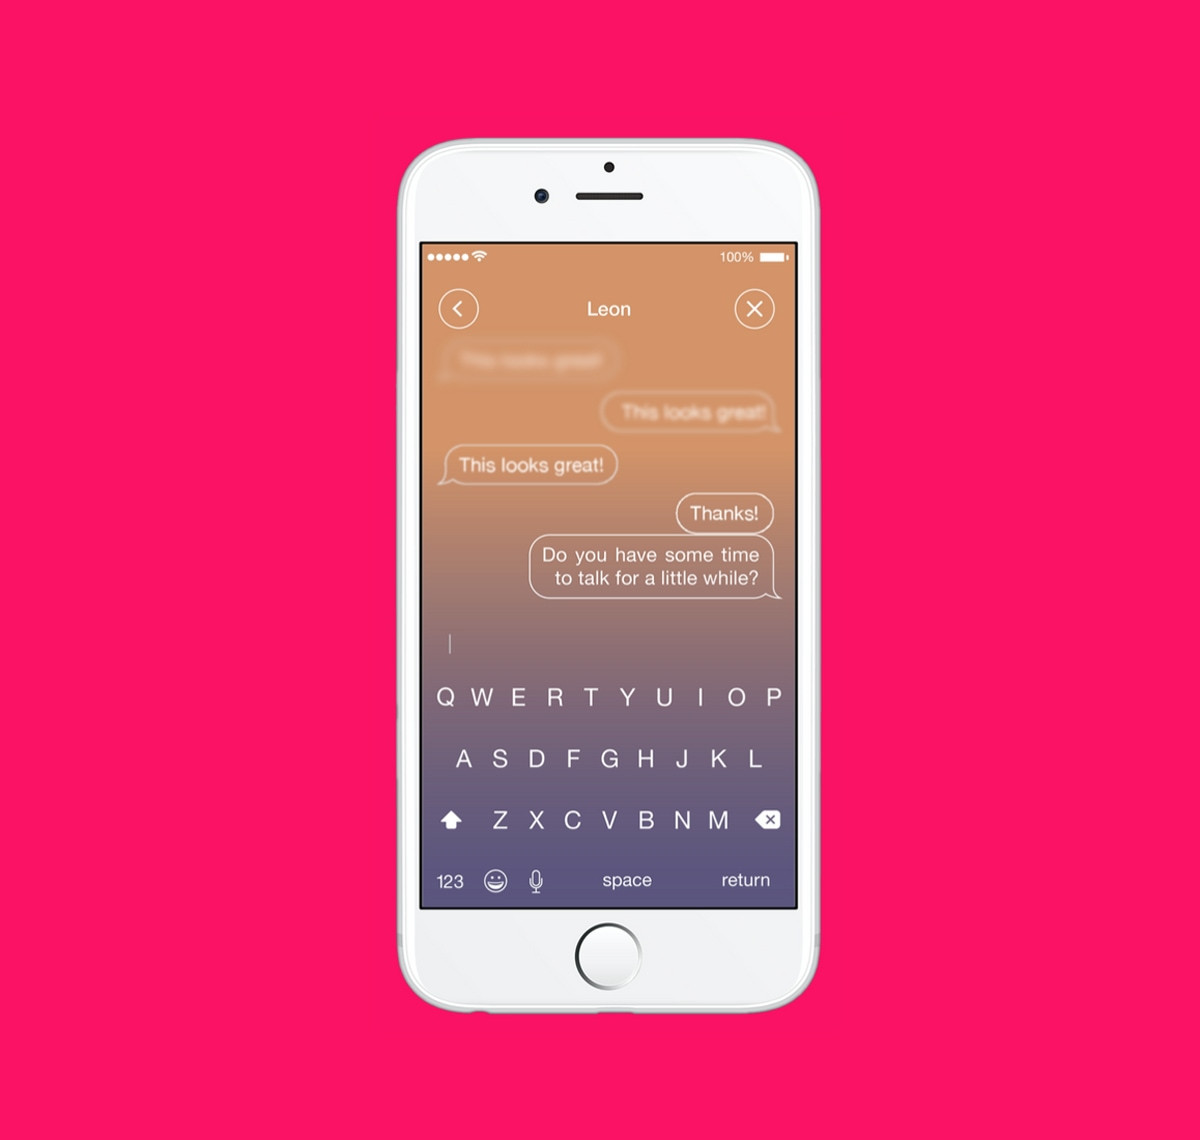 A print of a cellphone with a conversation inside a messaging app